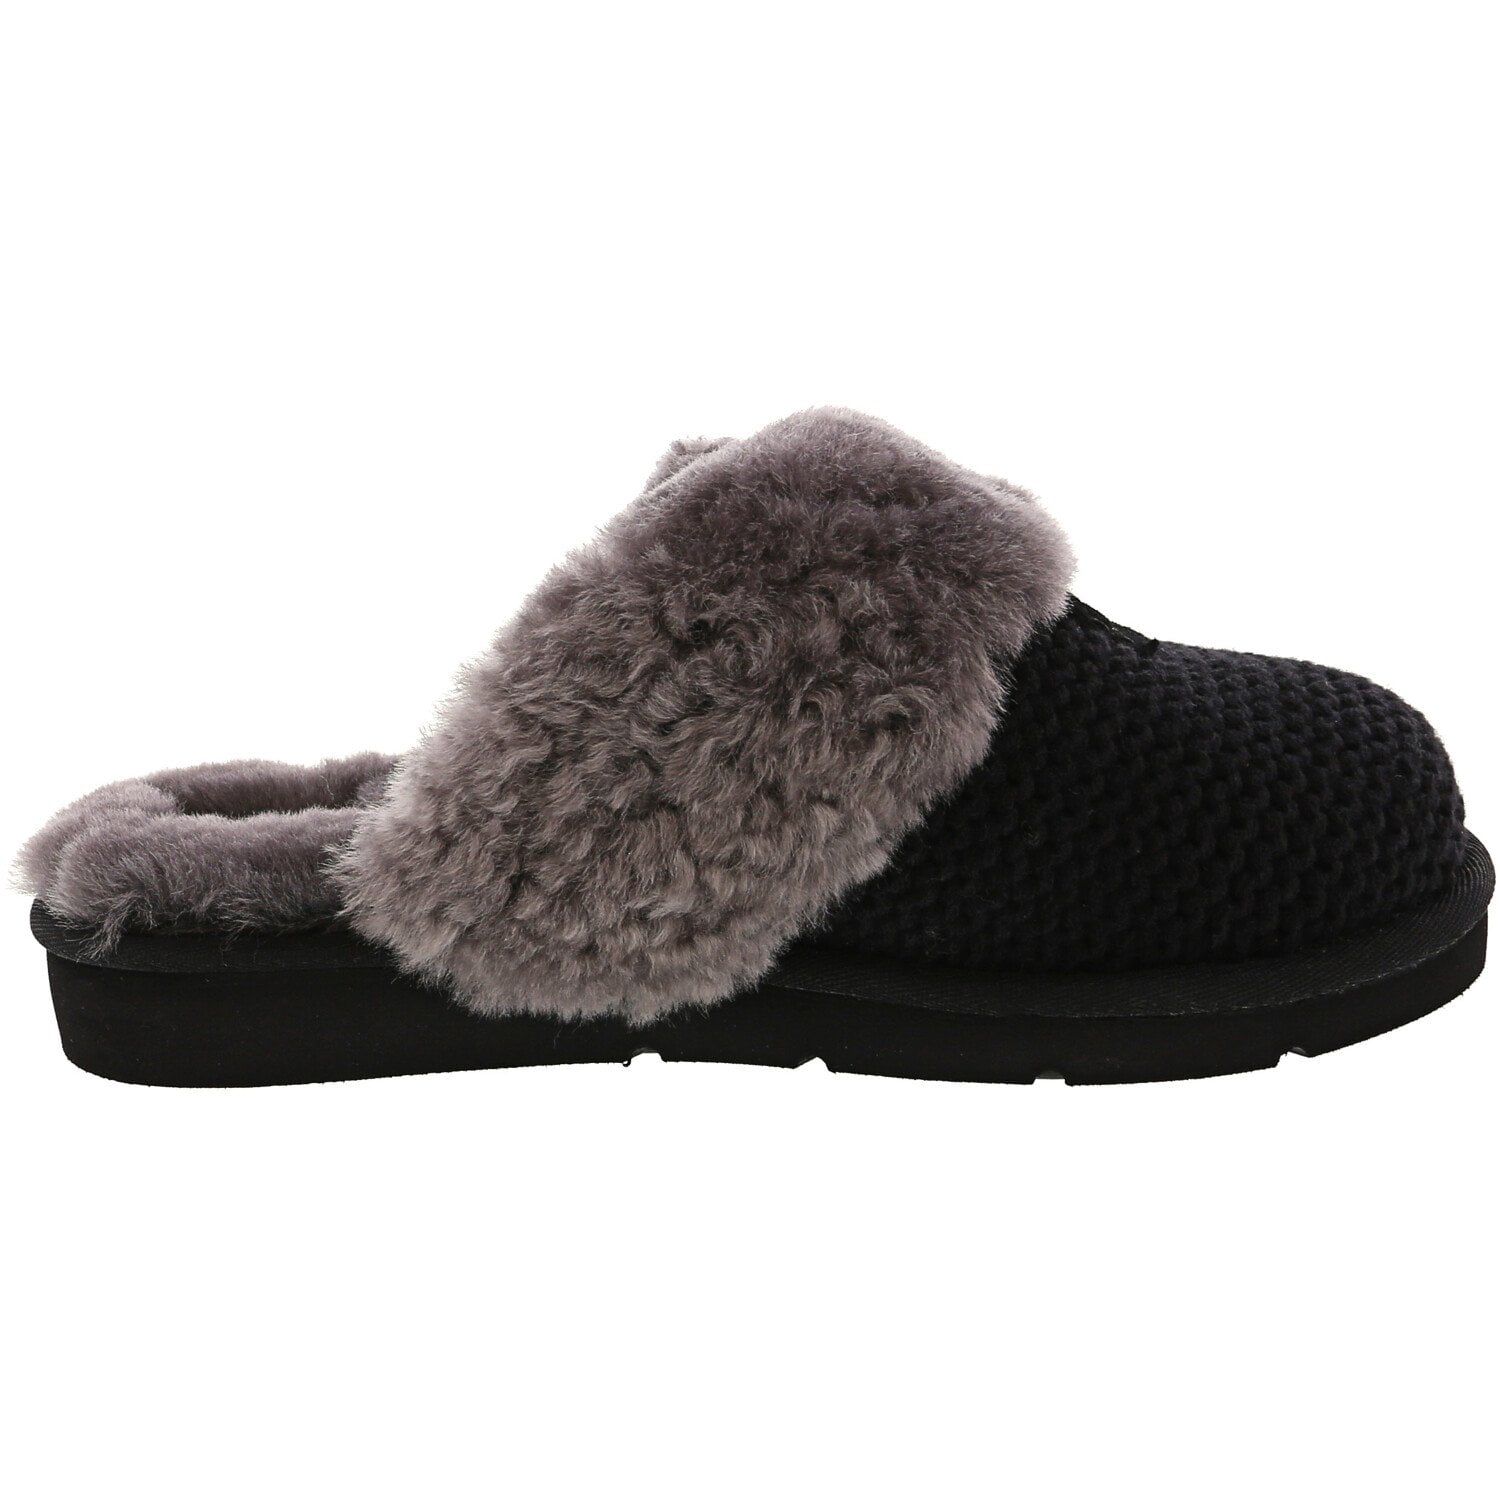 ugg women's cozy knit slippers